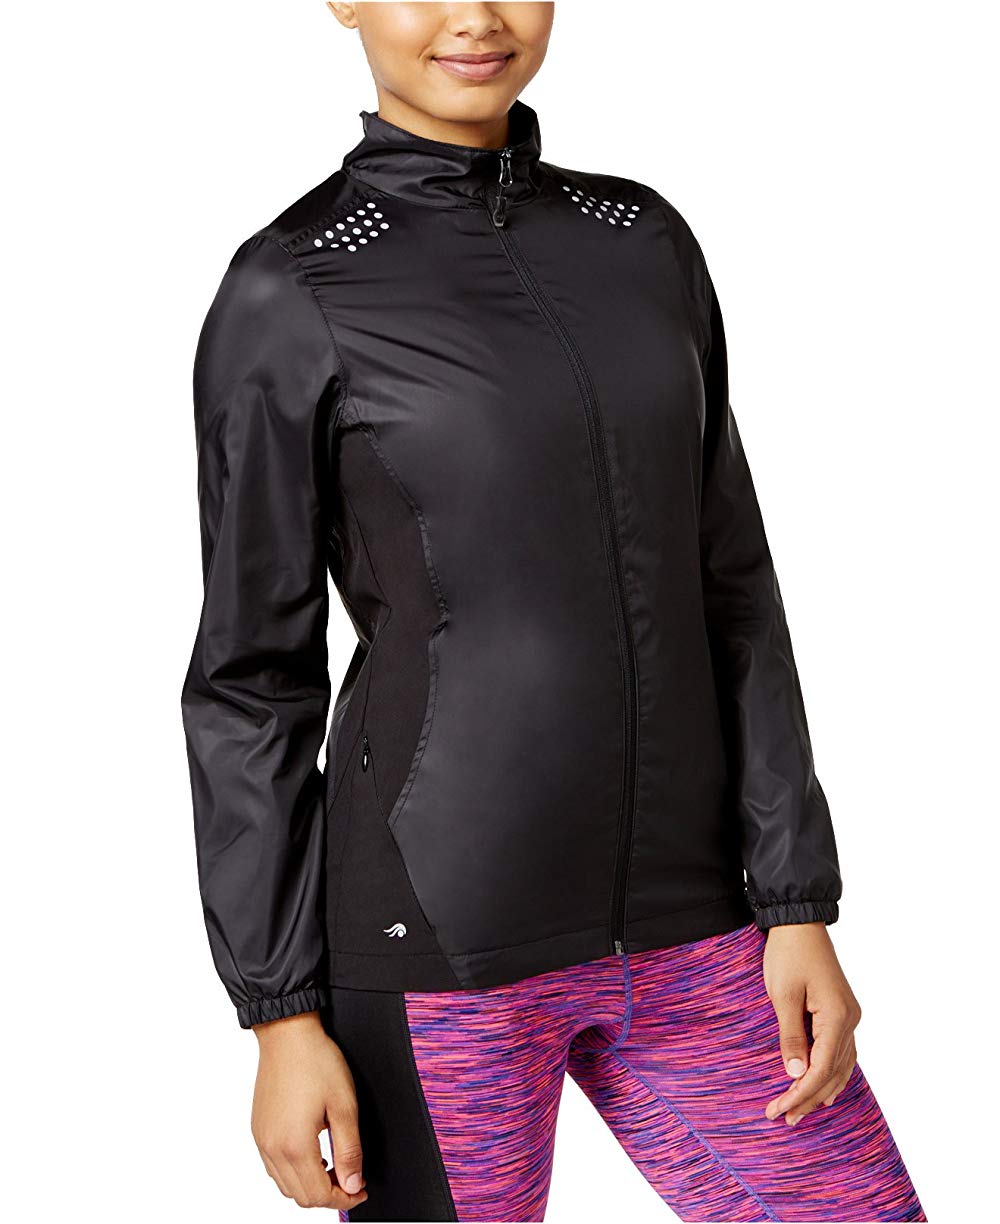 allbrand365 designer Ideology Womens Colorblock Active Wear Windbreaker Jacket - image 1 of 1